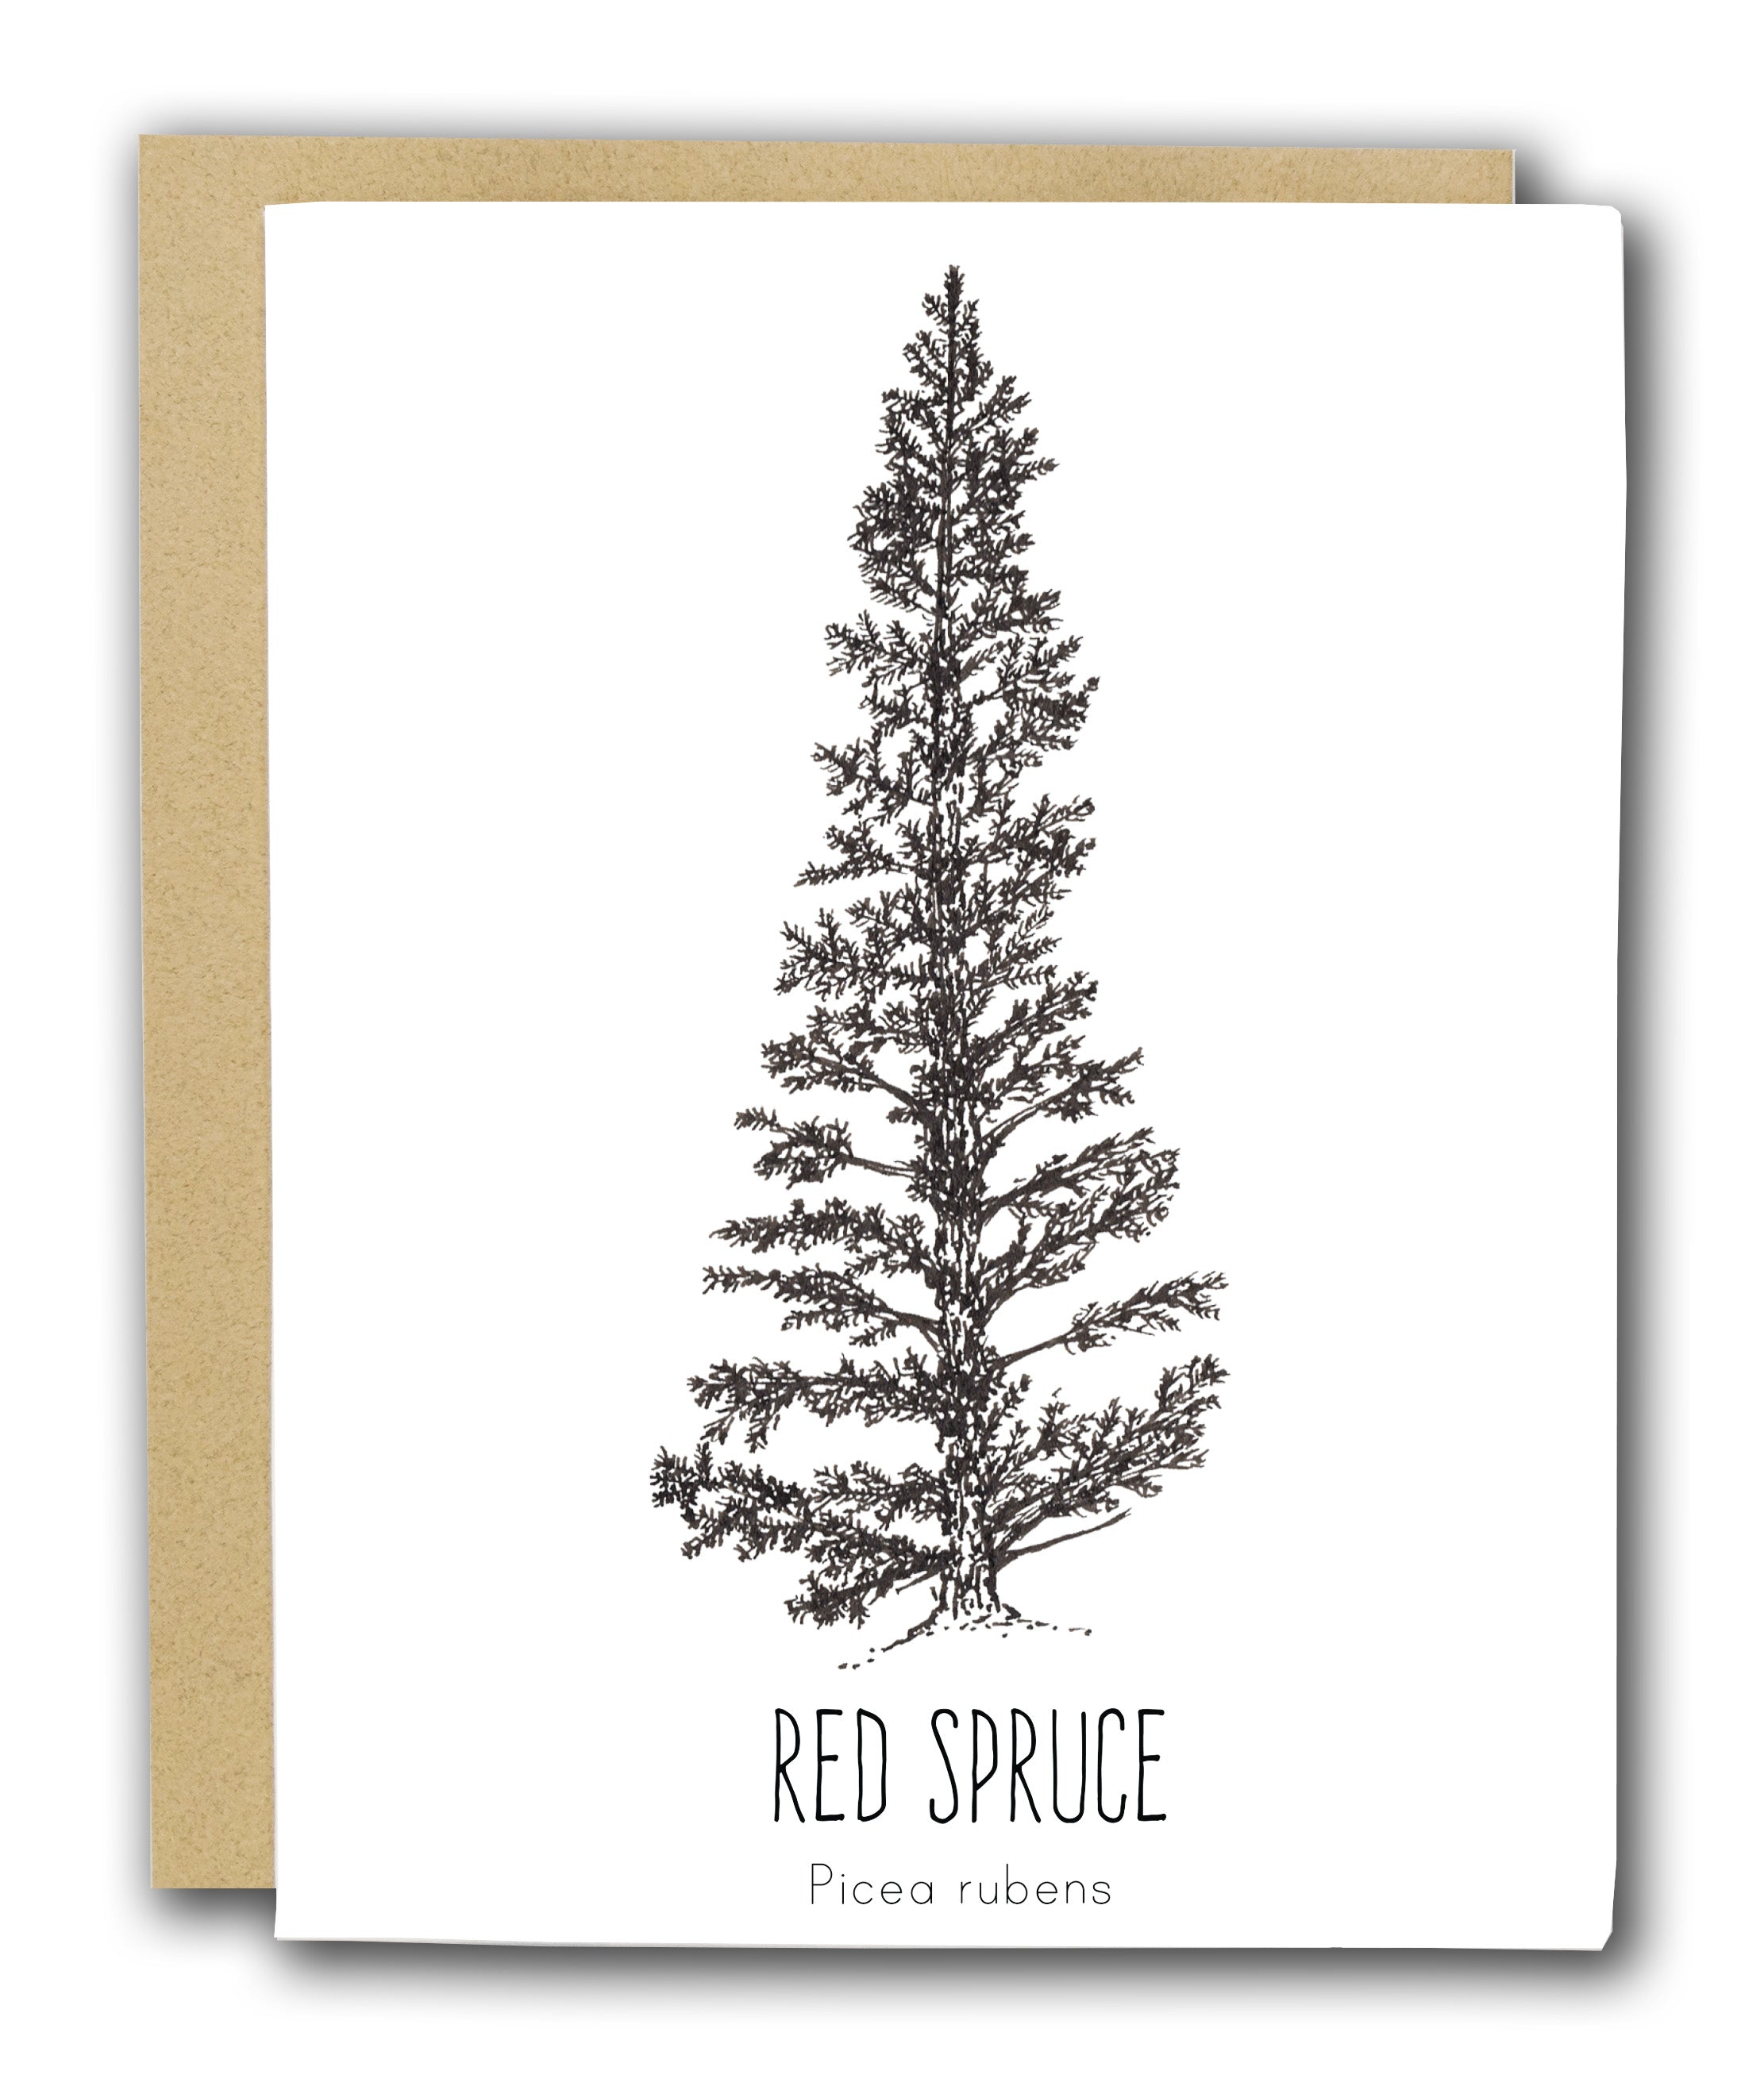 Red Spruce Letterpress Card